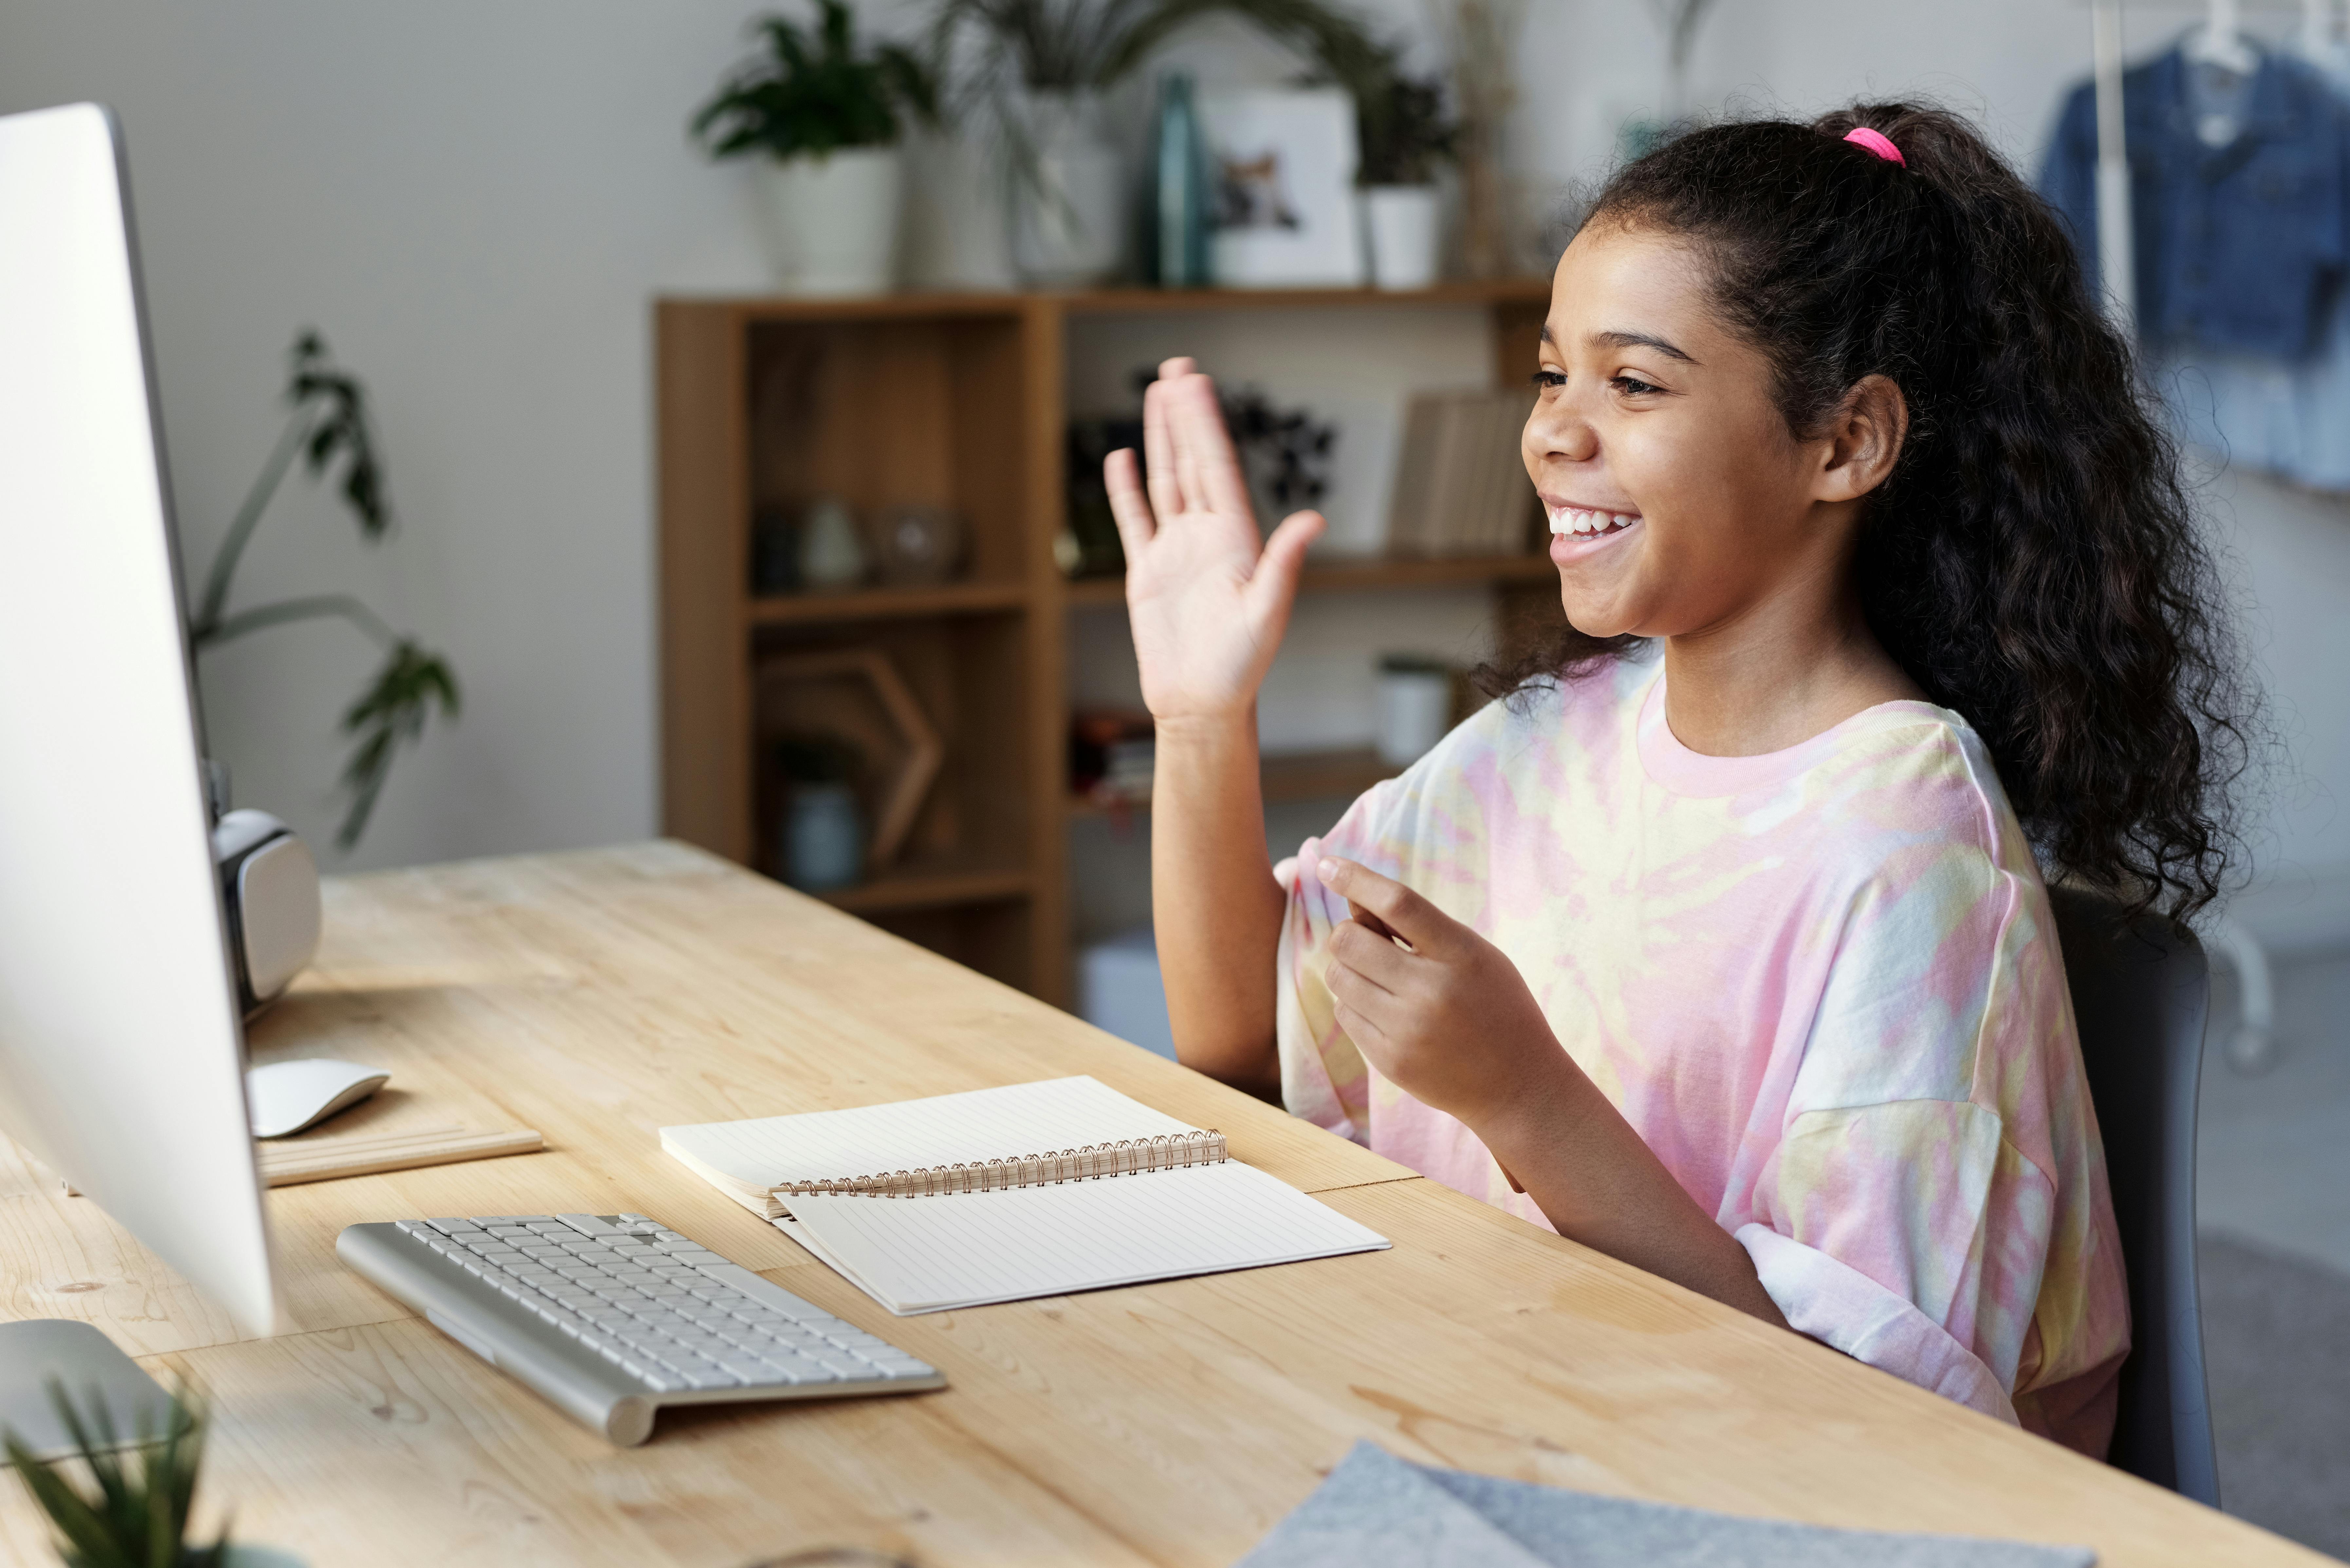 Young girl waving to computer screen